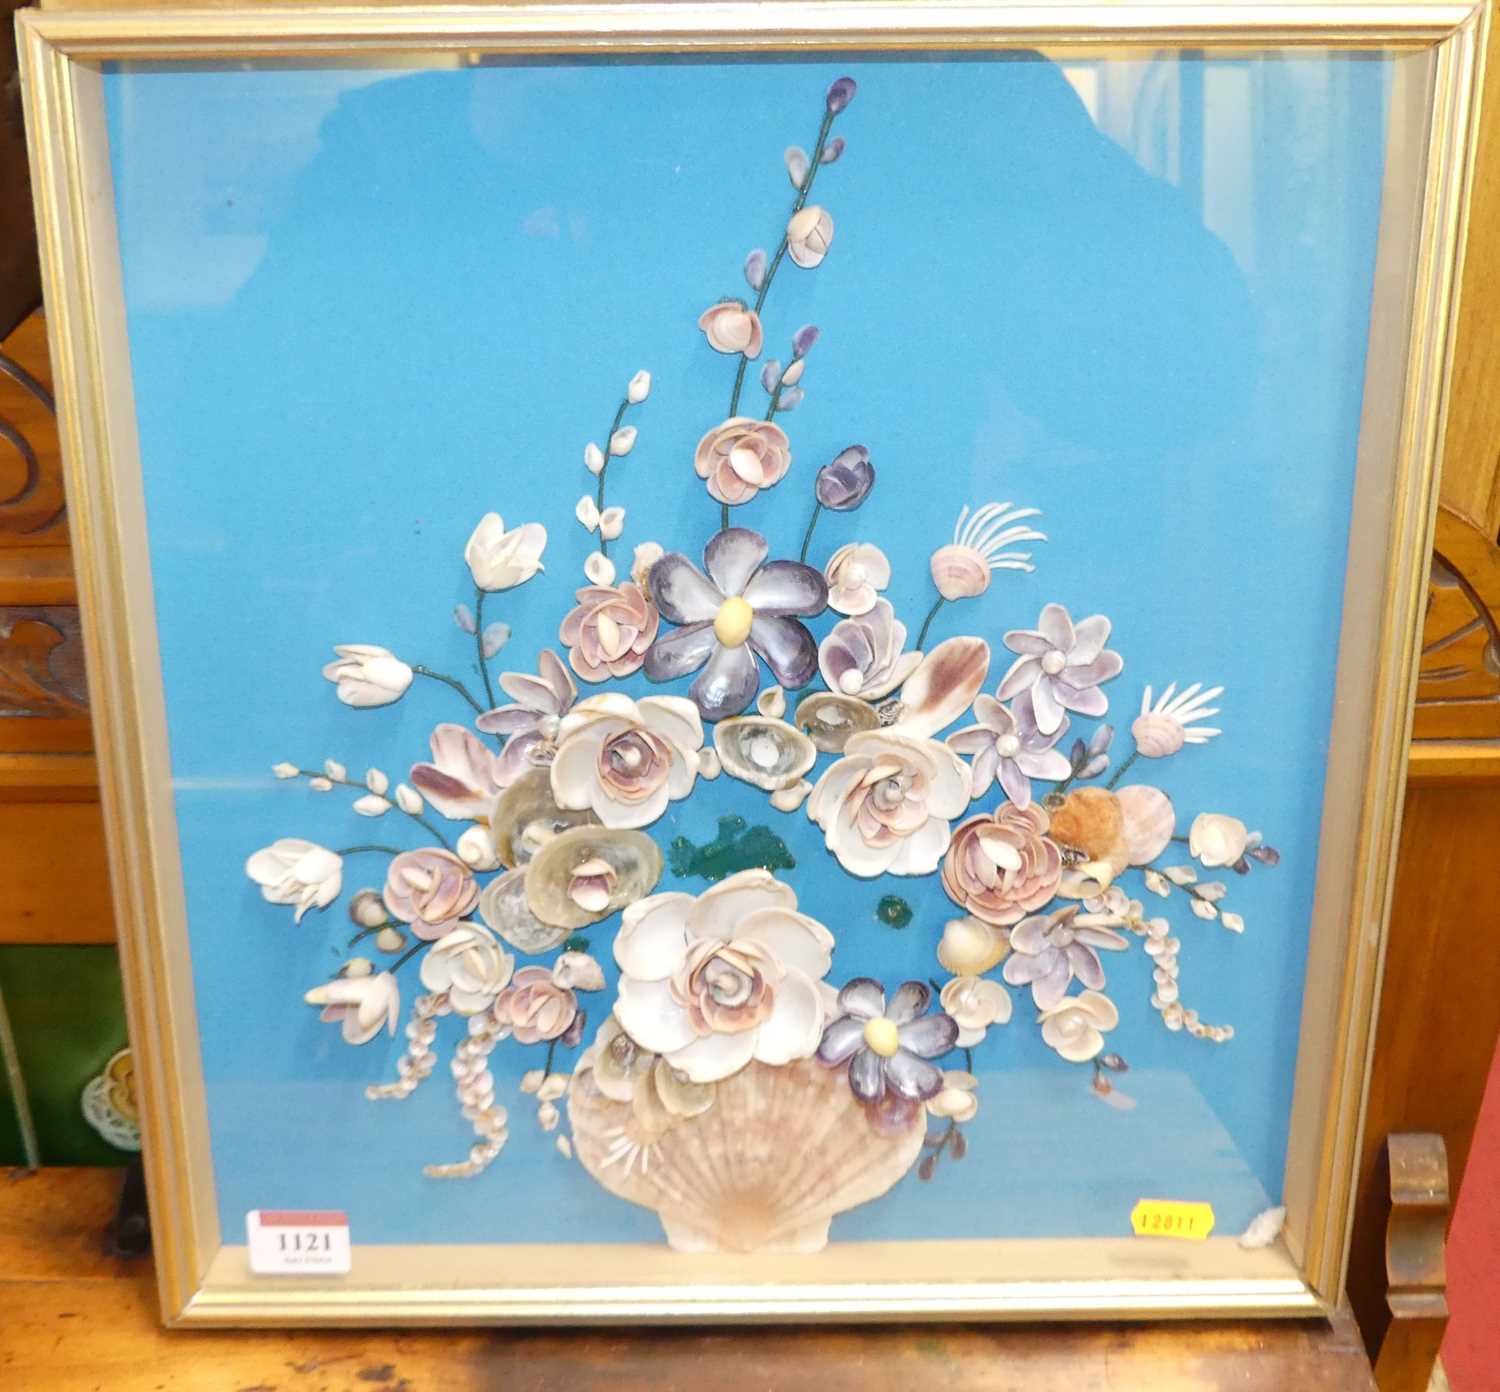 A framed display of shell art, 37 x 35cm